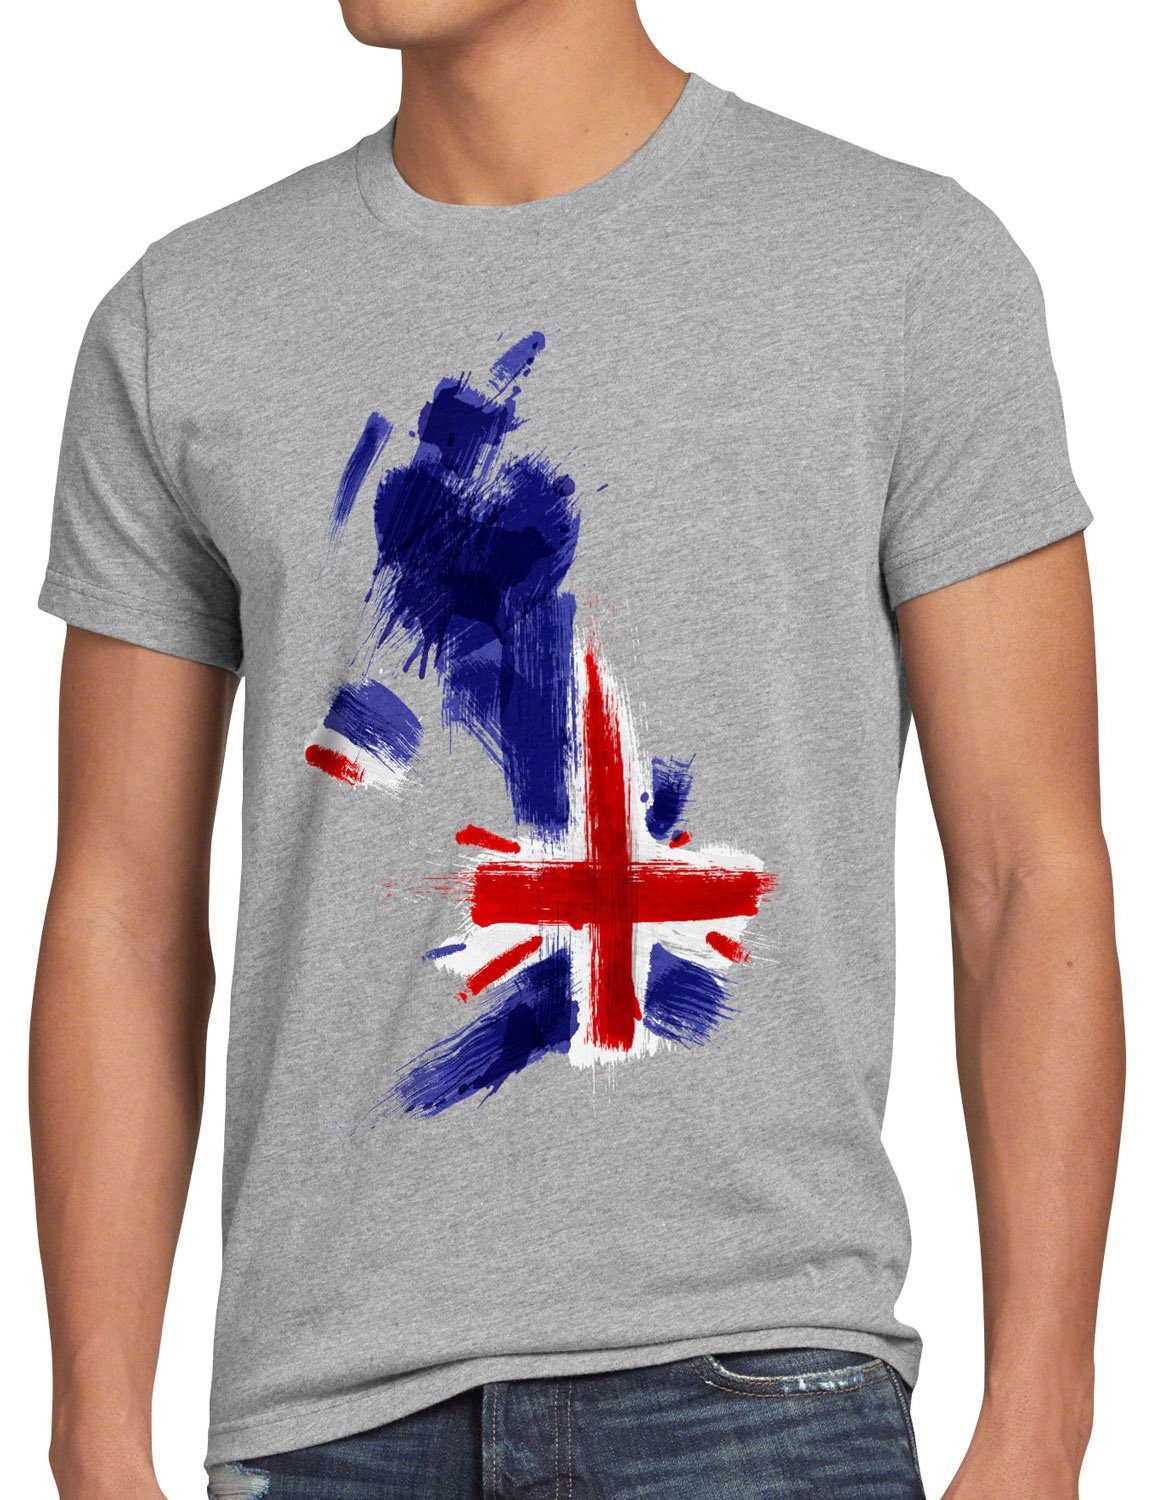 style3 Print-Shirt Herren T-Shirt Fahne Great WM Flagge Britain meliert EM Sport Fußball England grau